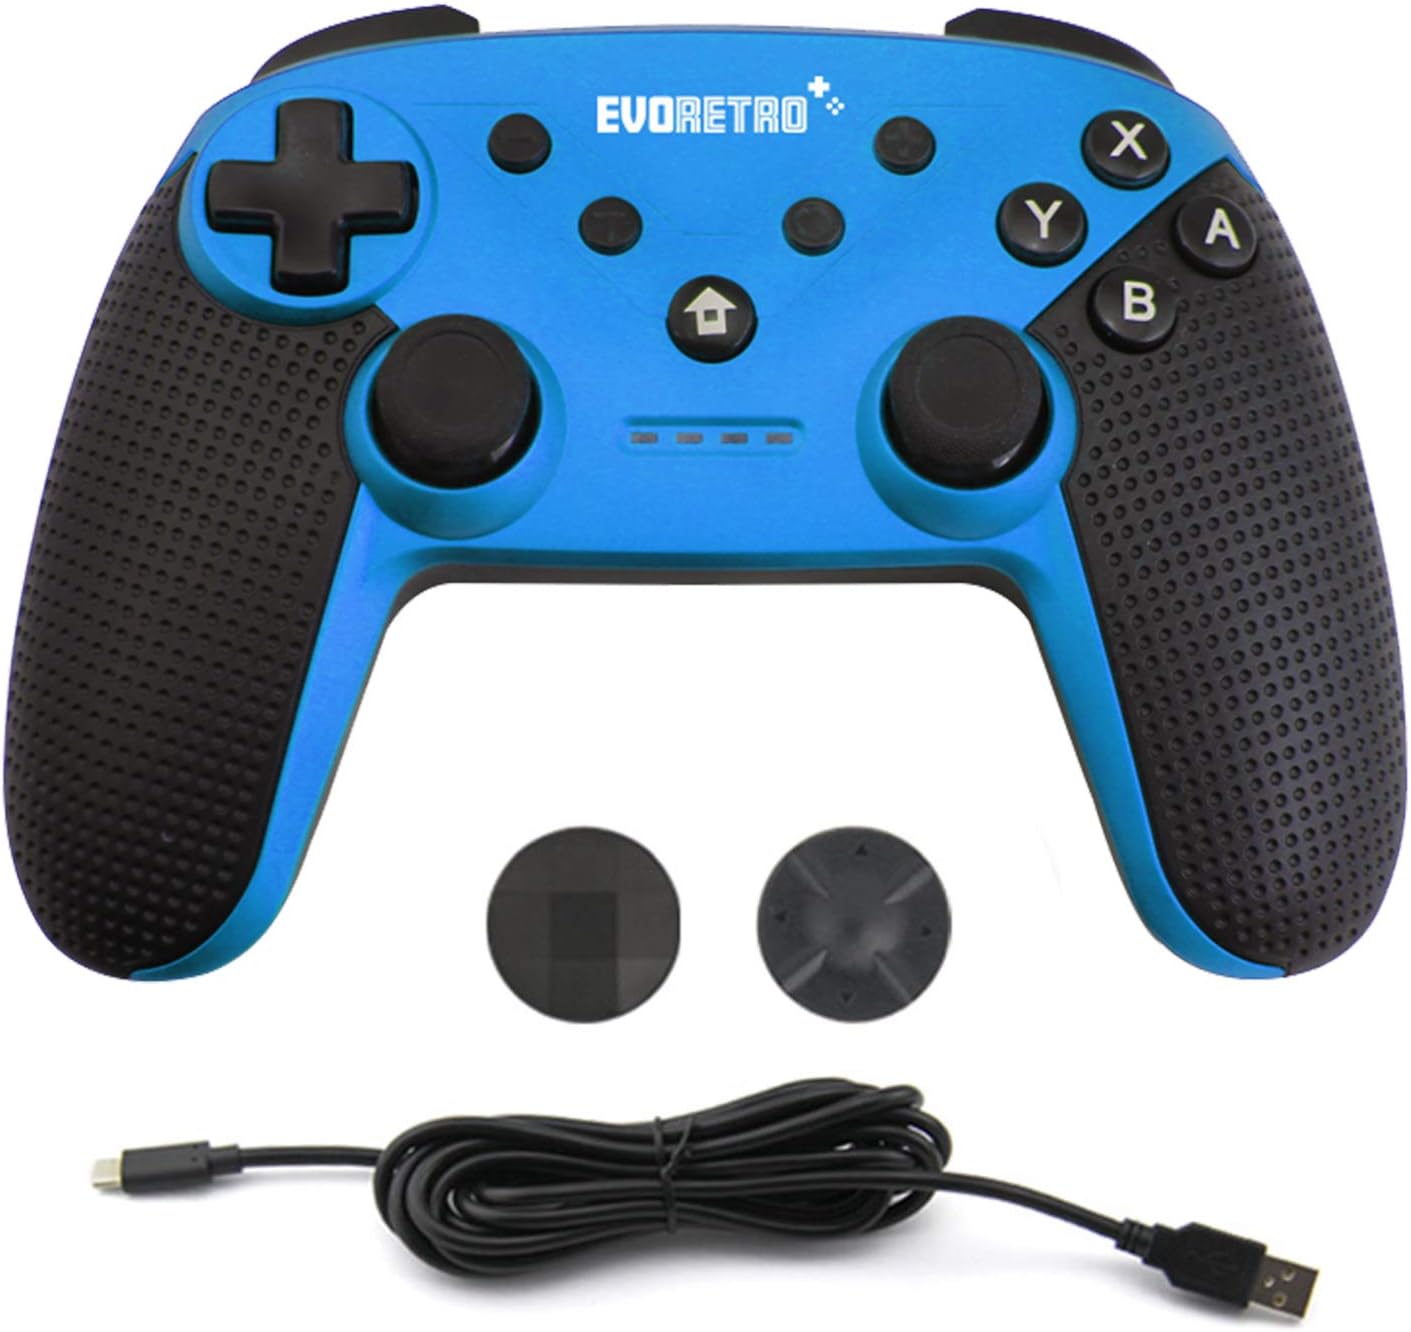 Wireless bluetooth controller (blue)